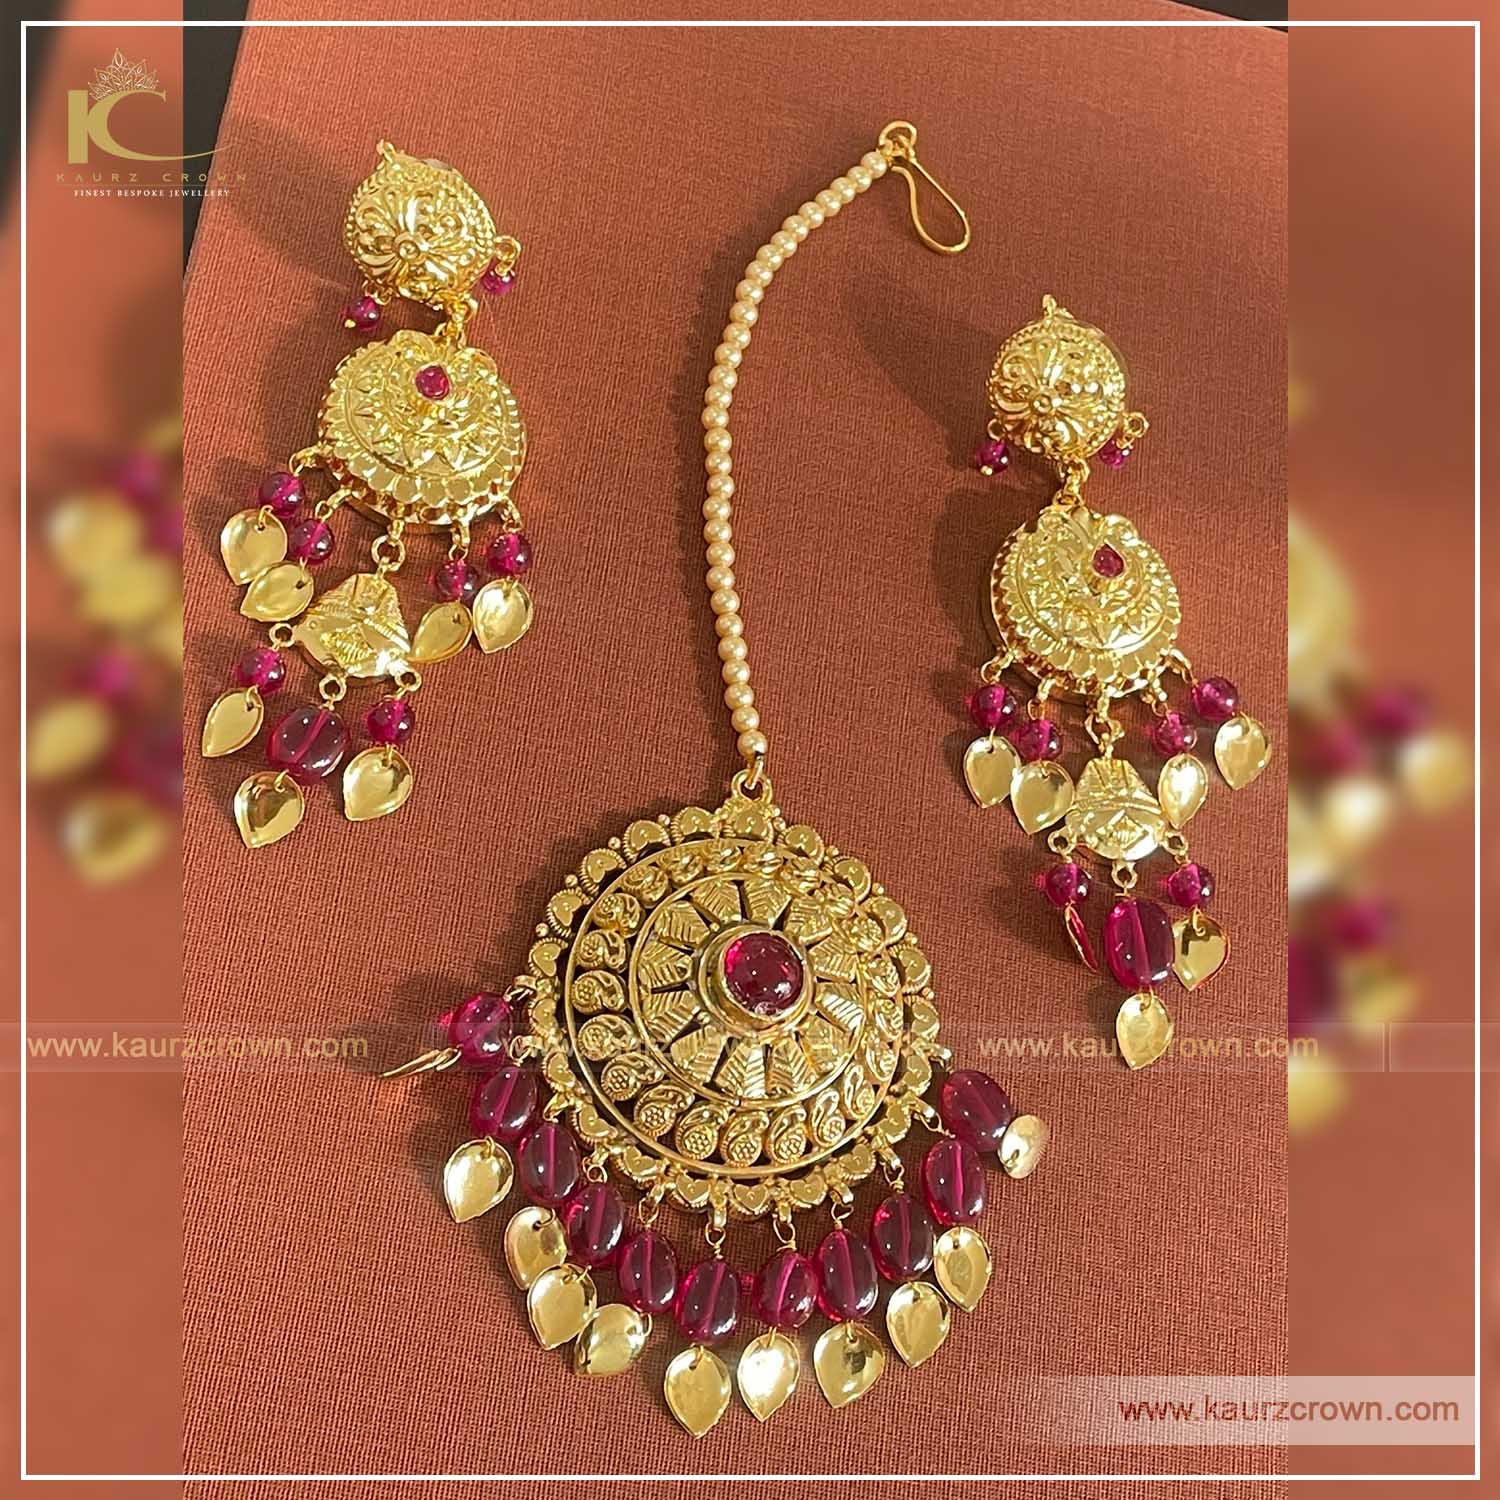 Suhag Traditional Antique Gold Plated Earrings Tikka Set , Kaurz crown , online jewellery store , suhag earrings tikka set kaurz crown jewellery Suhag Tikka set